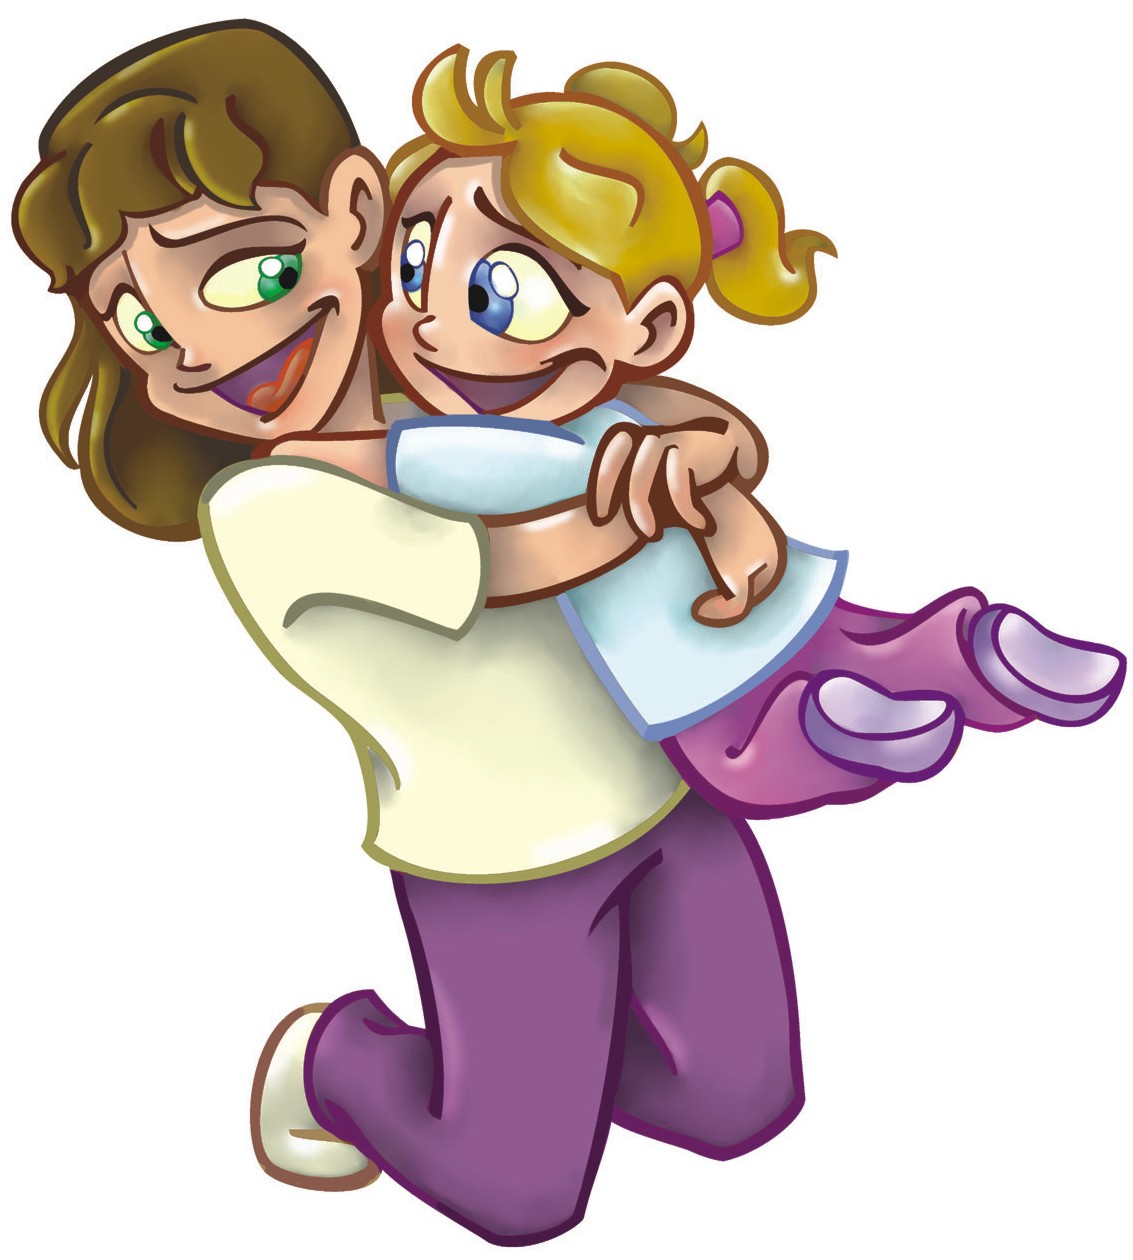 Free Sister Hug Cliparts, Download Free Sister Hug Cliparts png images